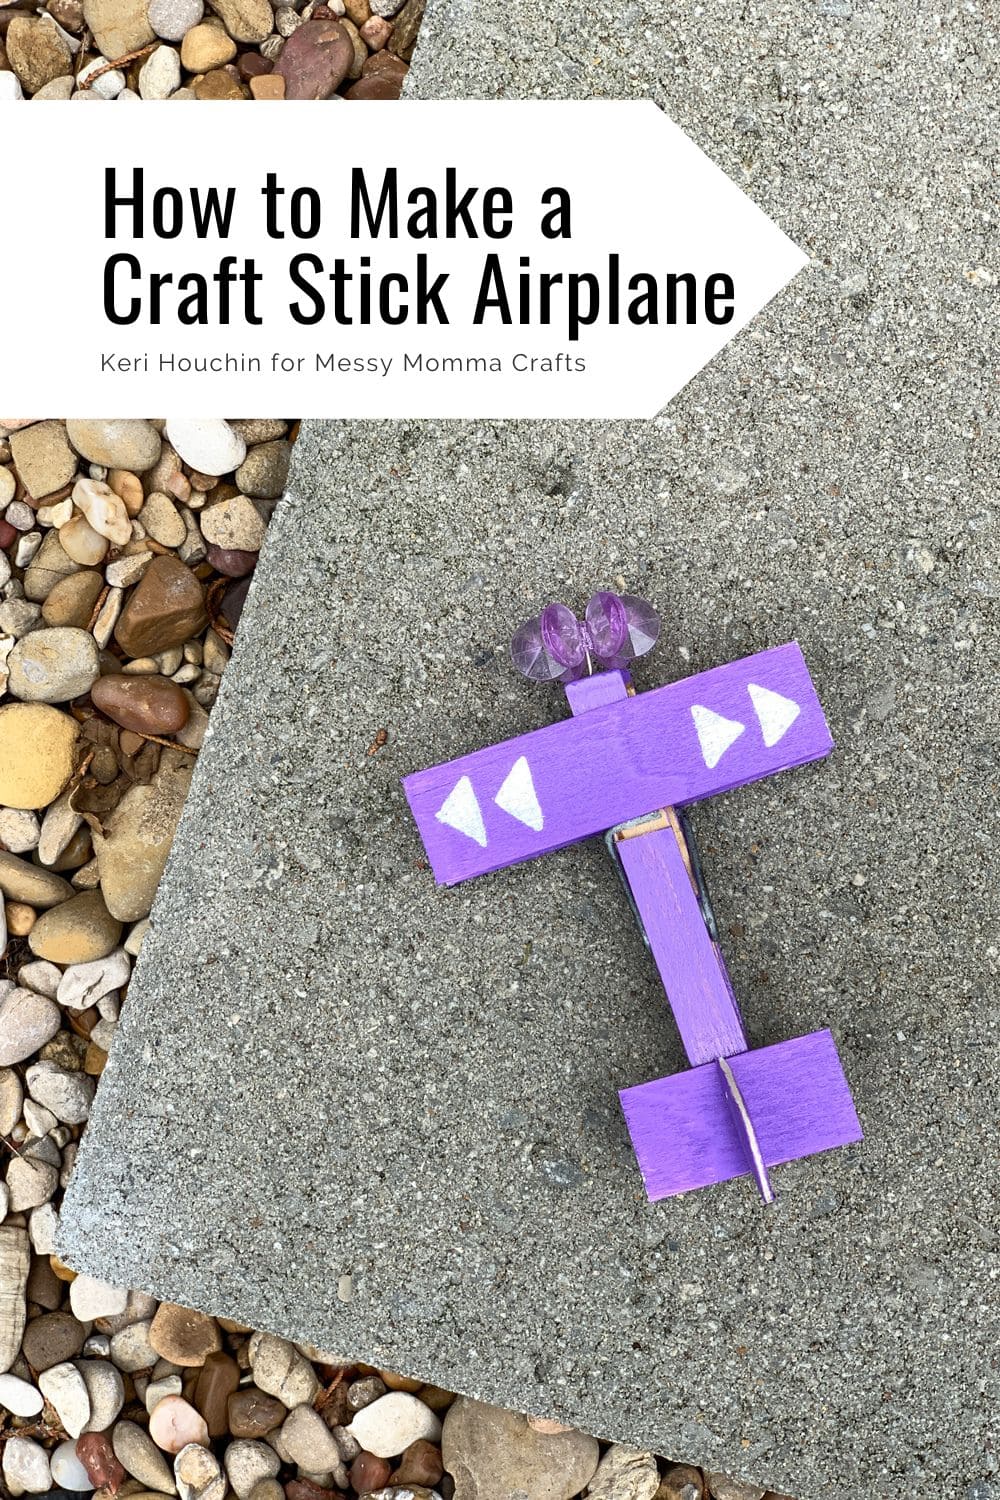 How to make a craft stick airplane.